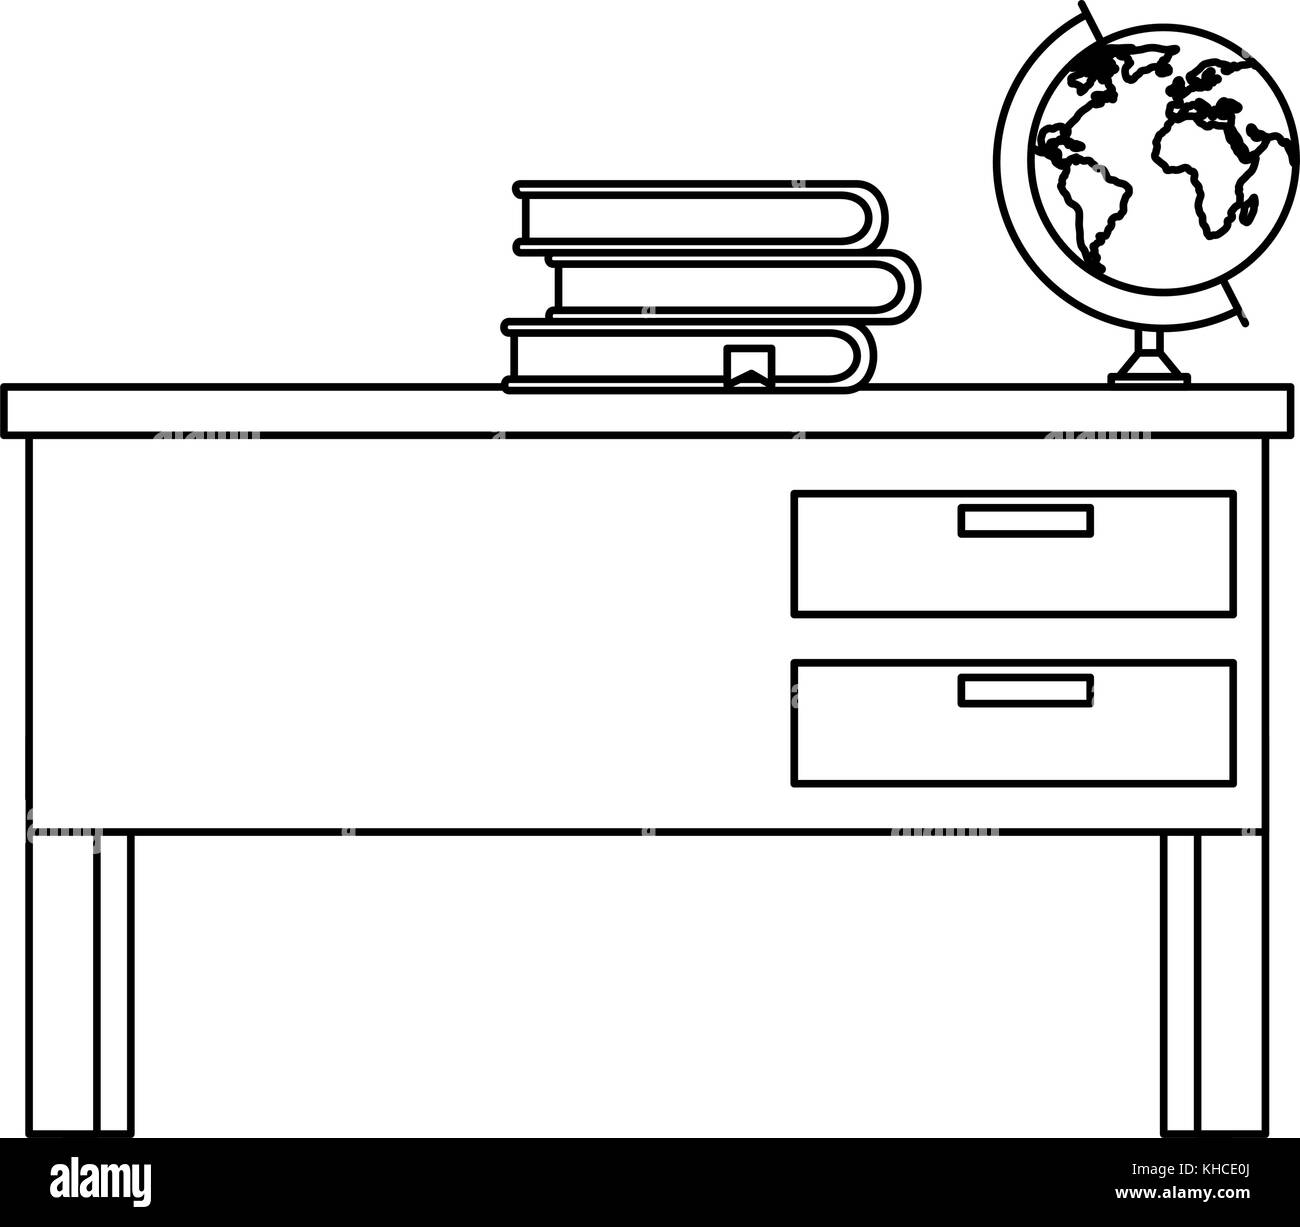 Teacher Desk With Books And Planet Vector Illustration Design